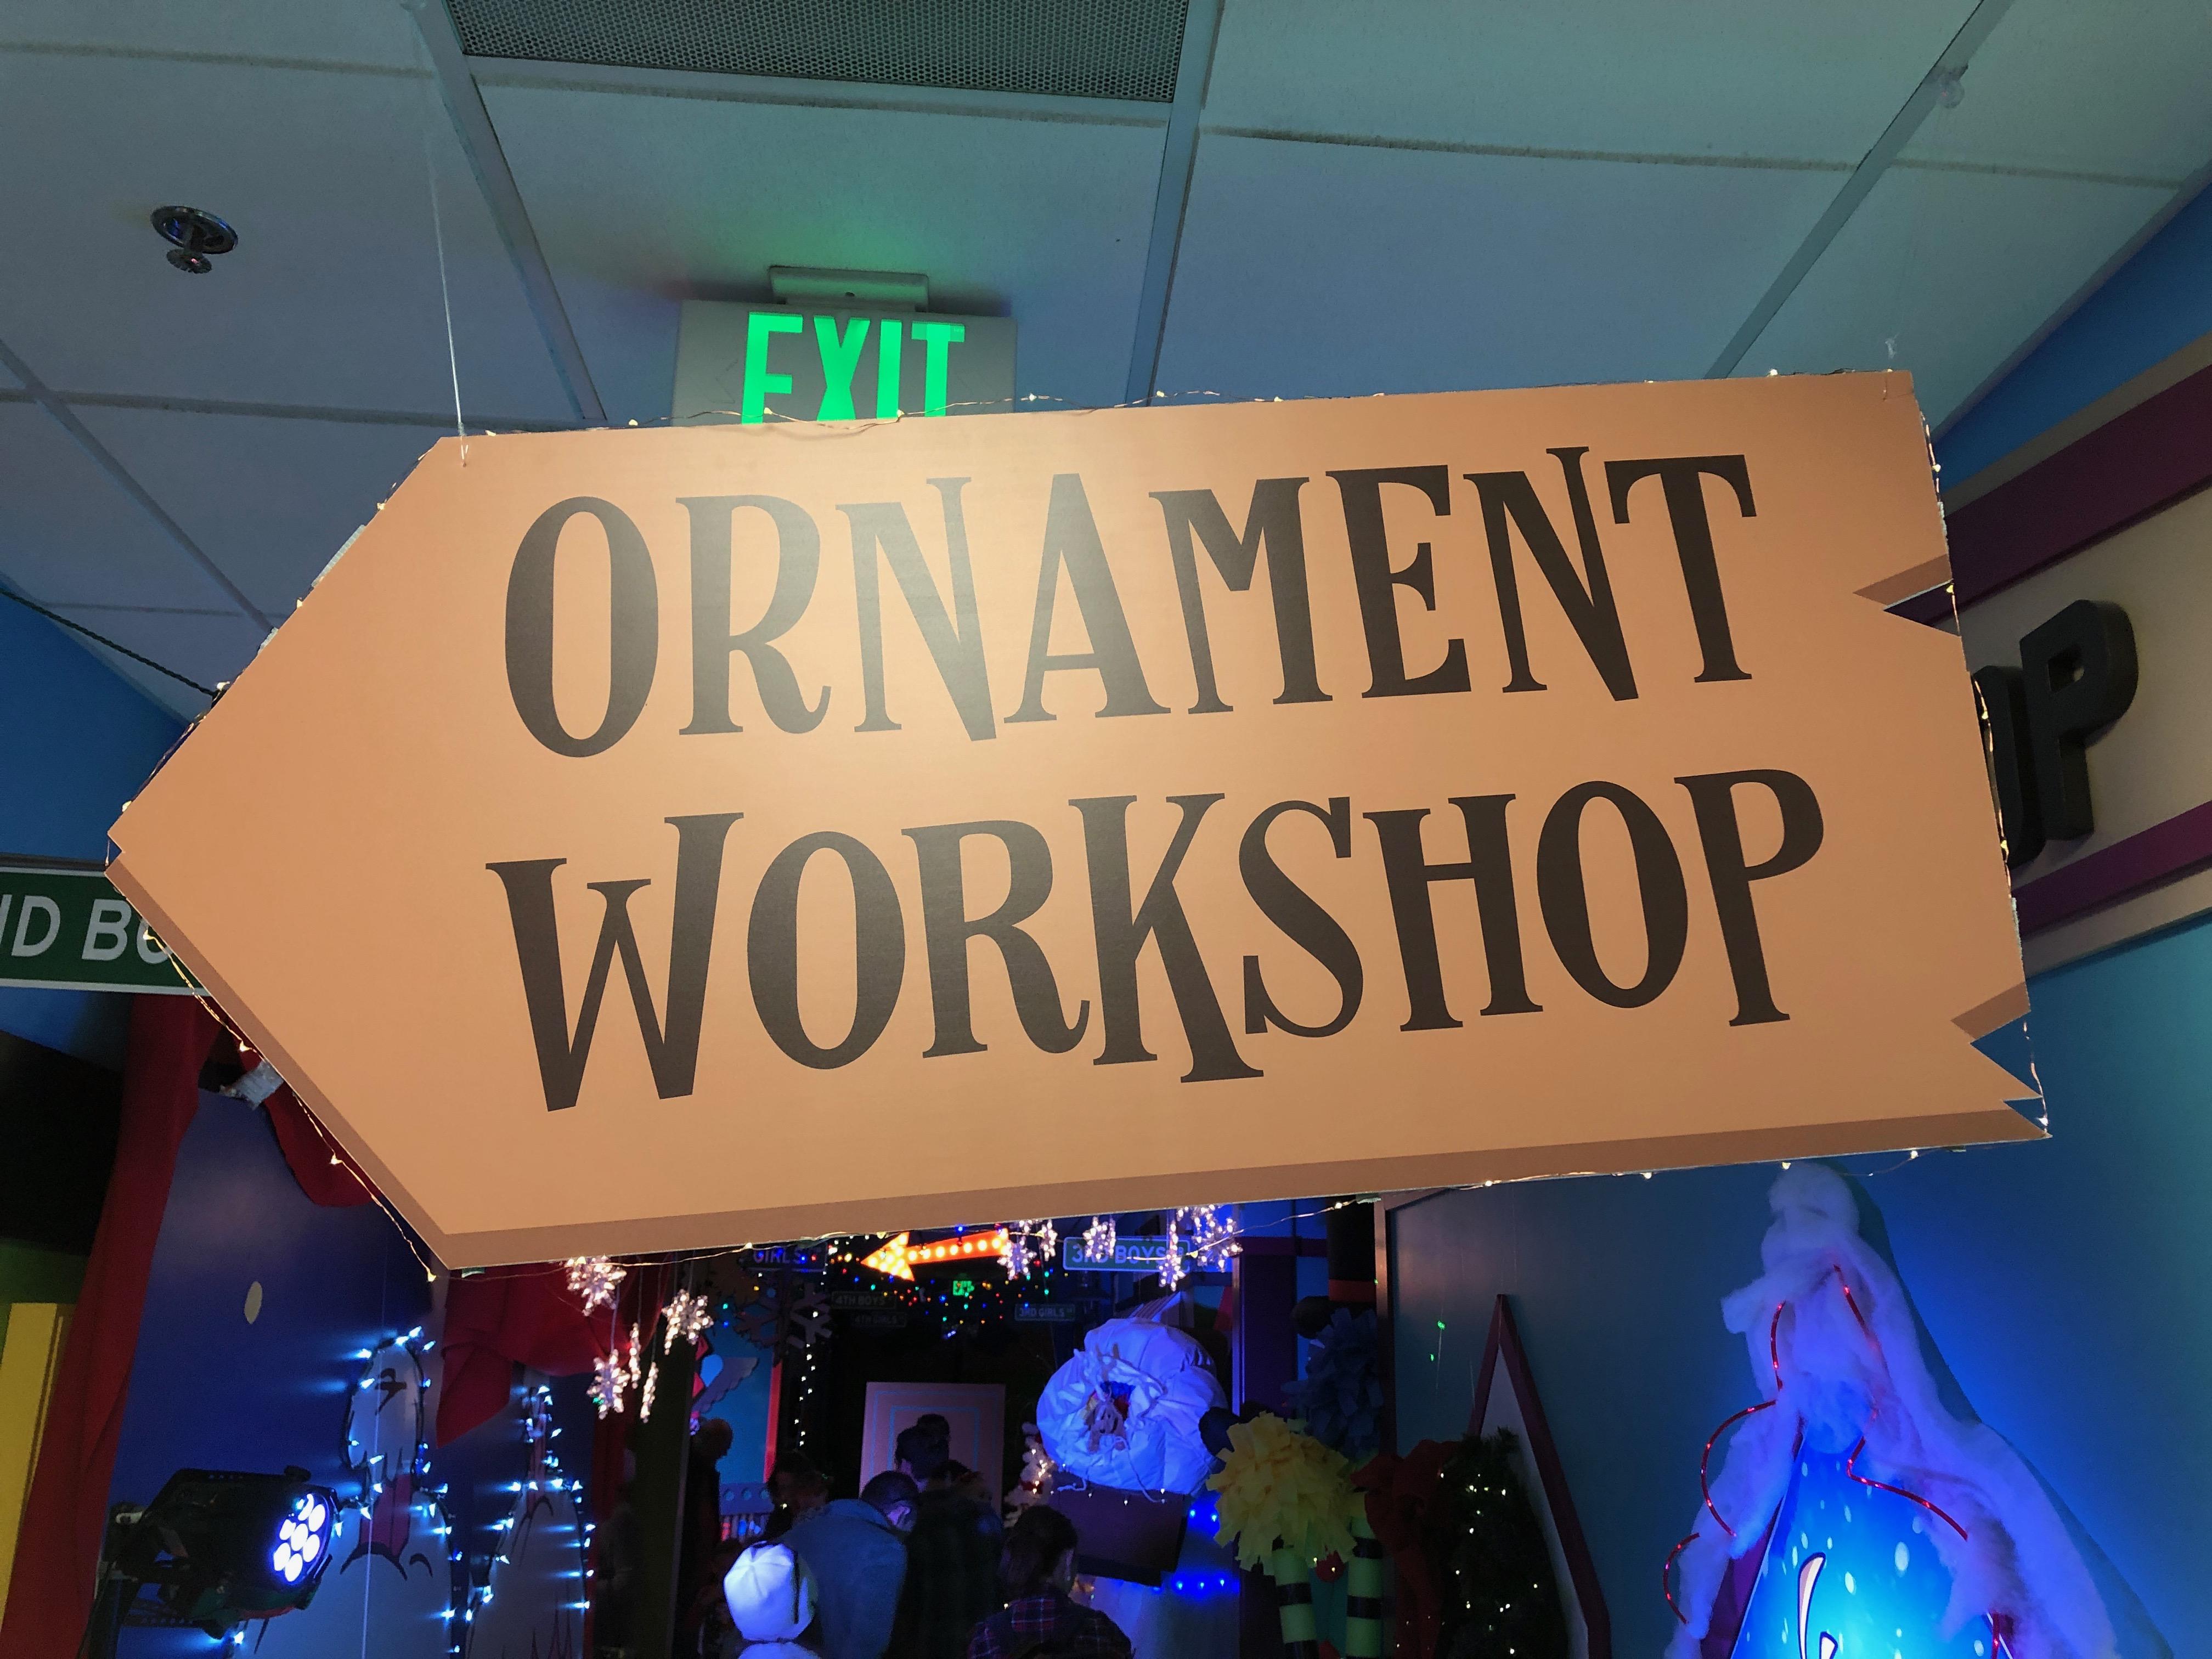 Ornament Workshop foamcore sign